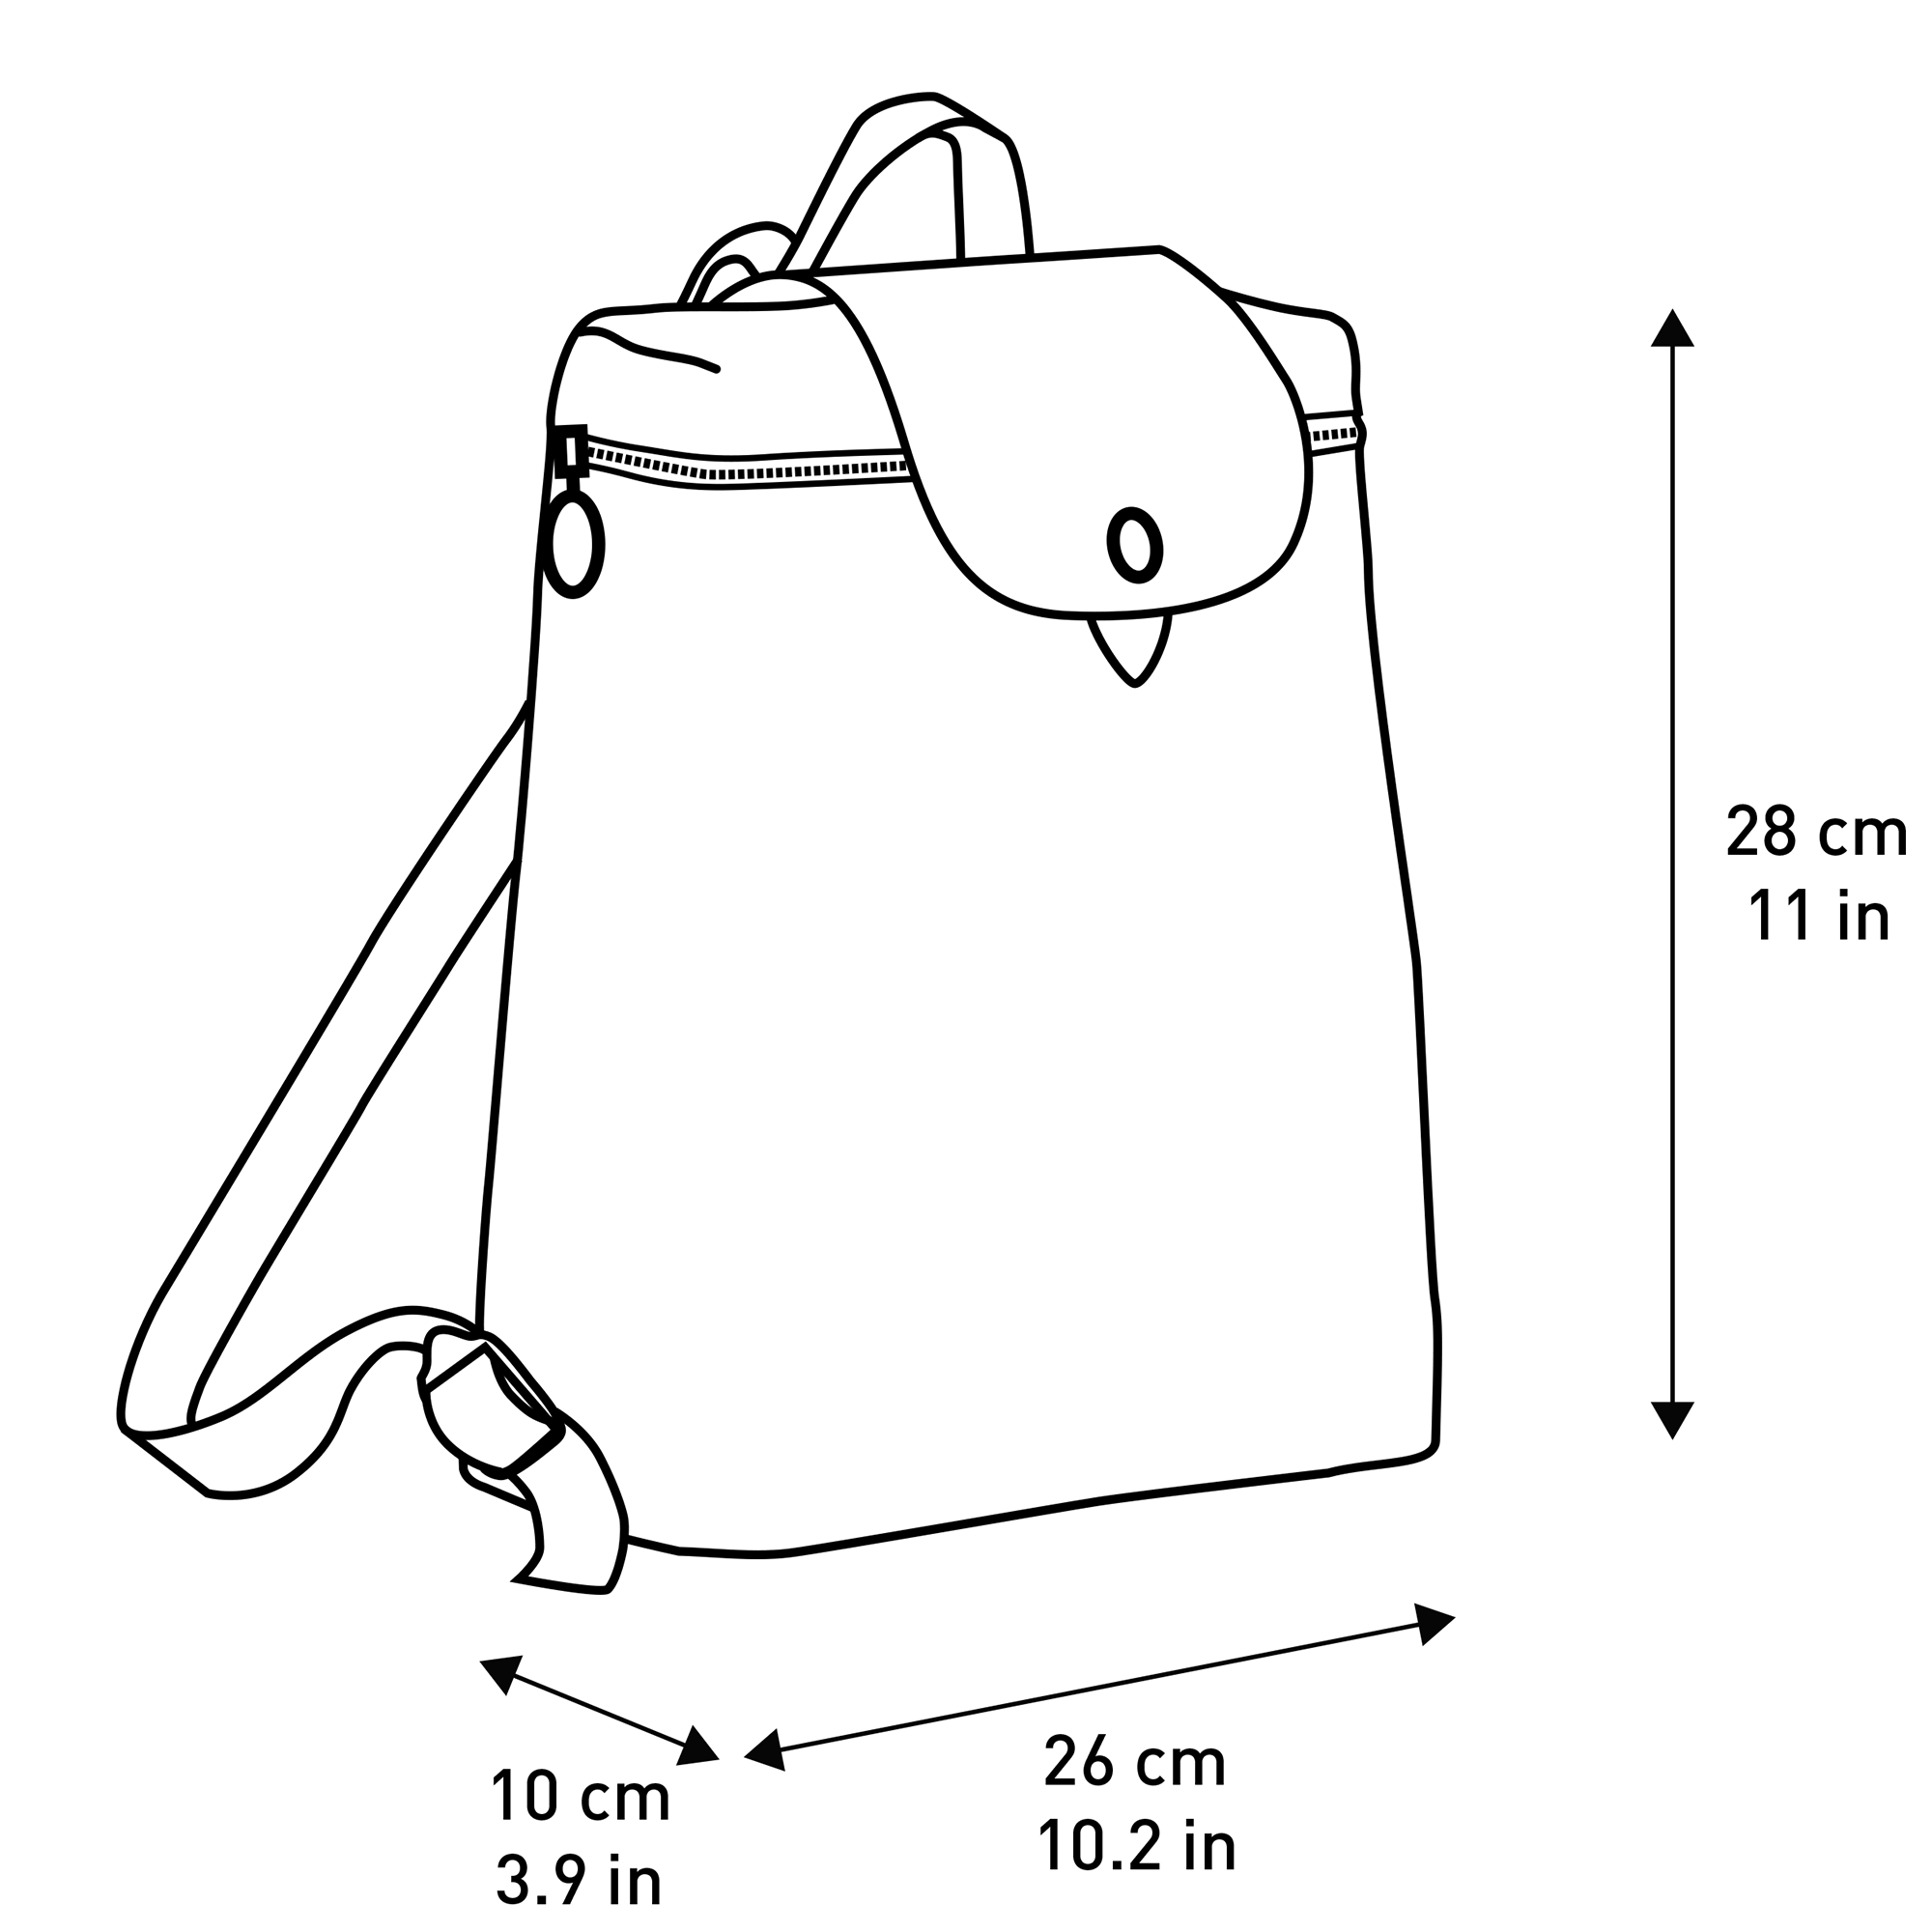 longchamp backpack size